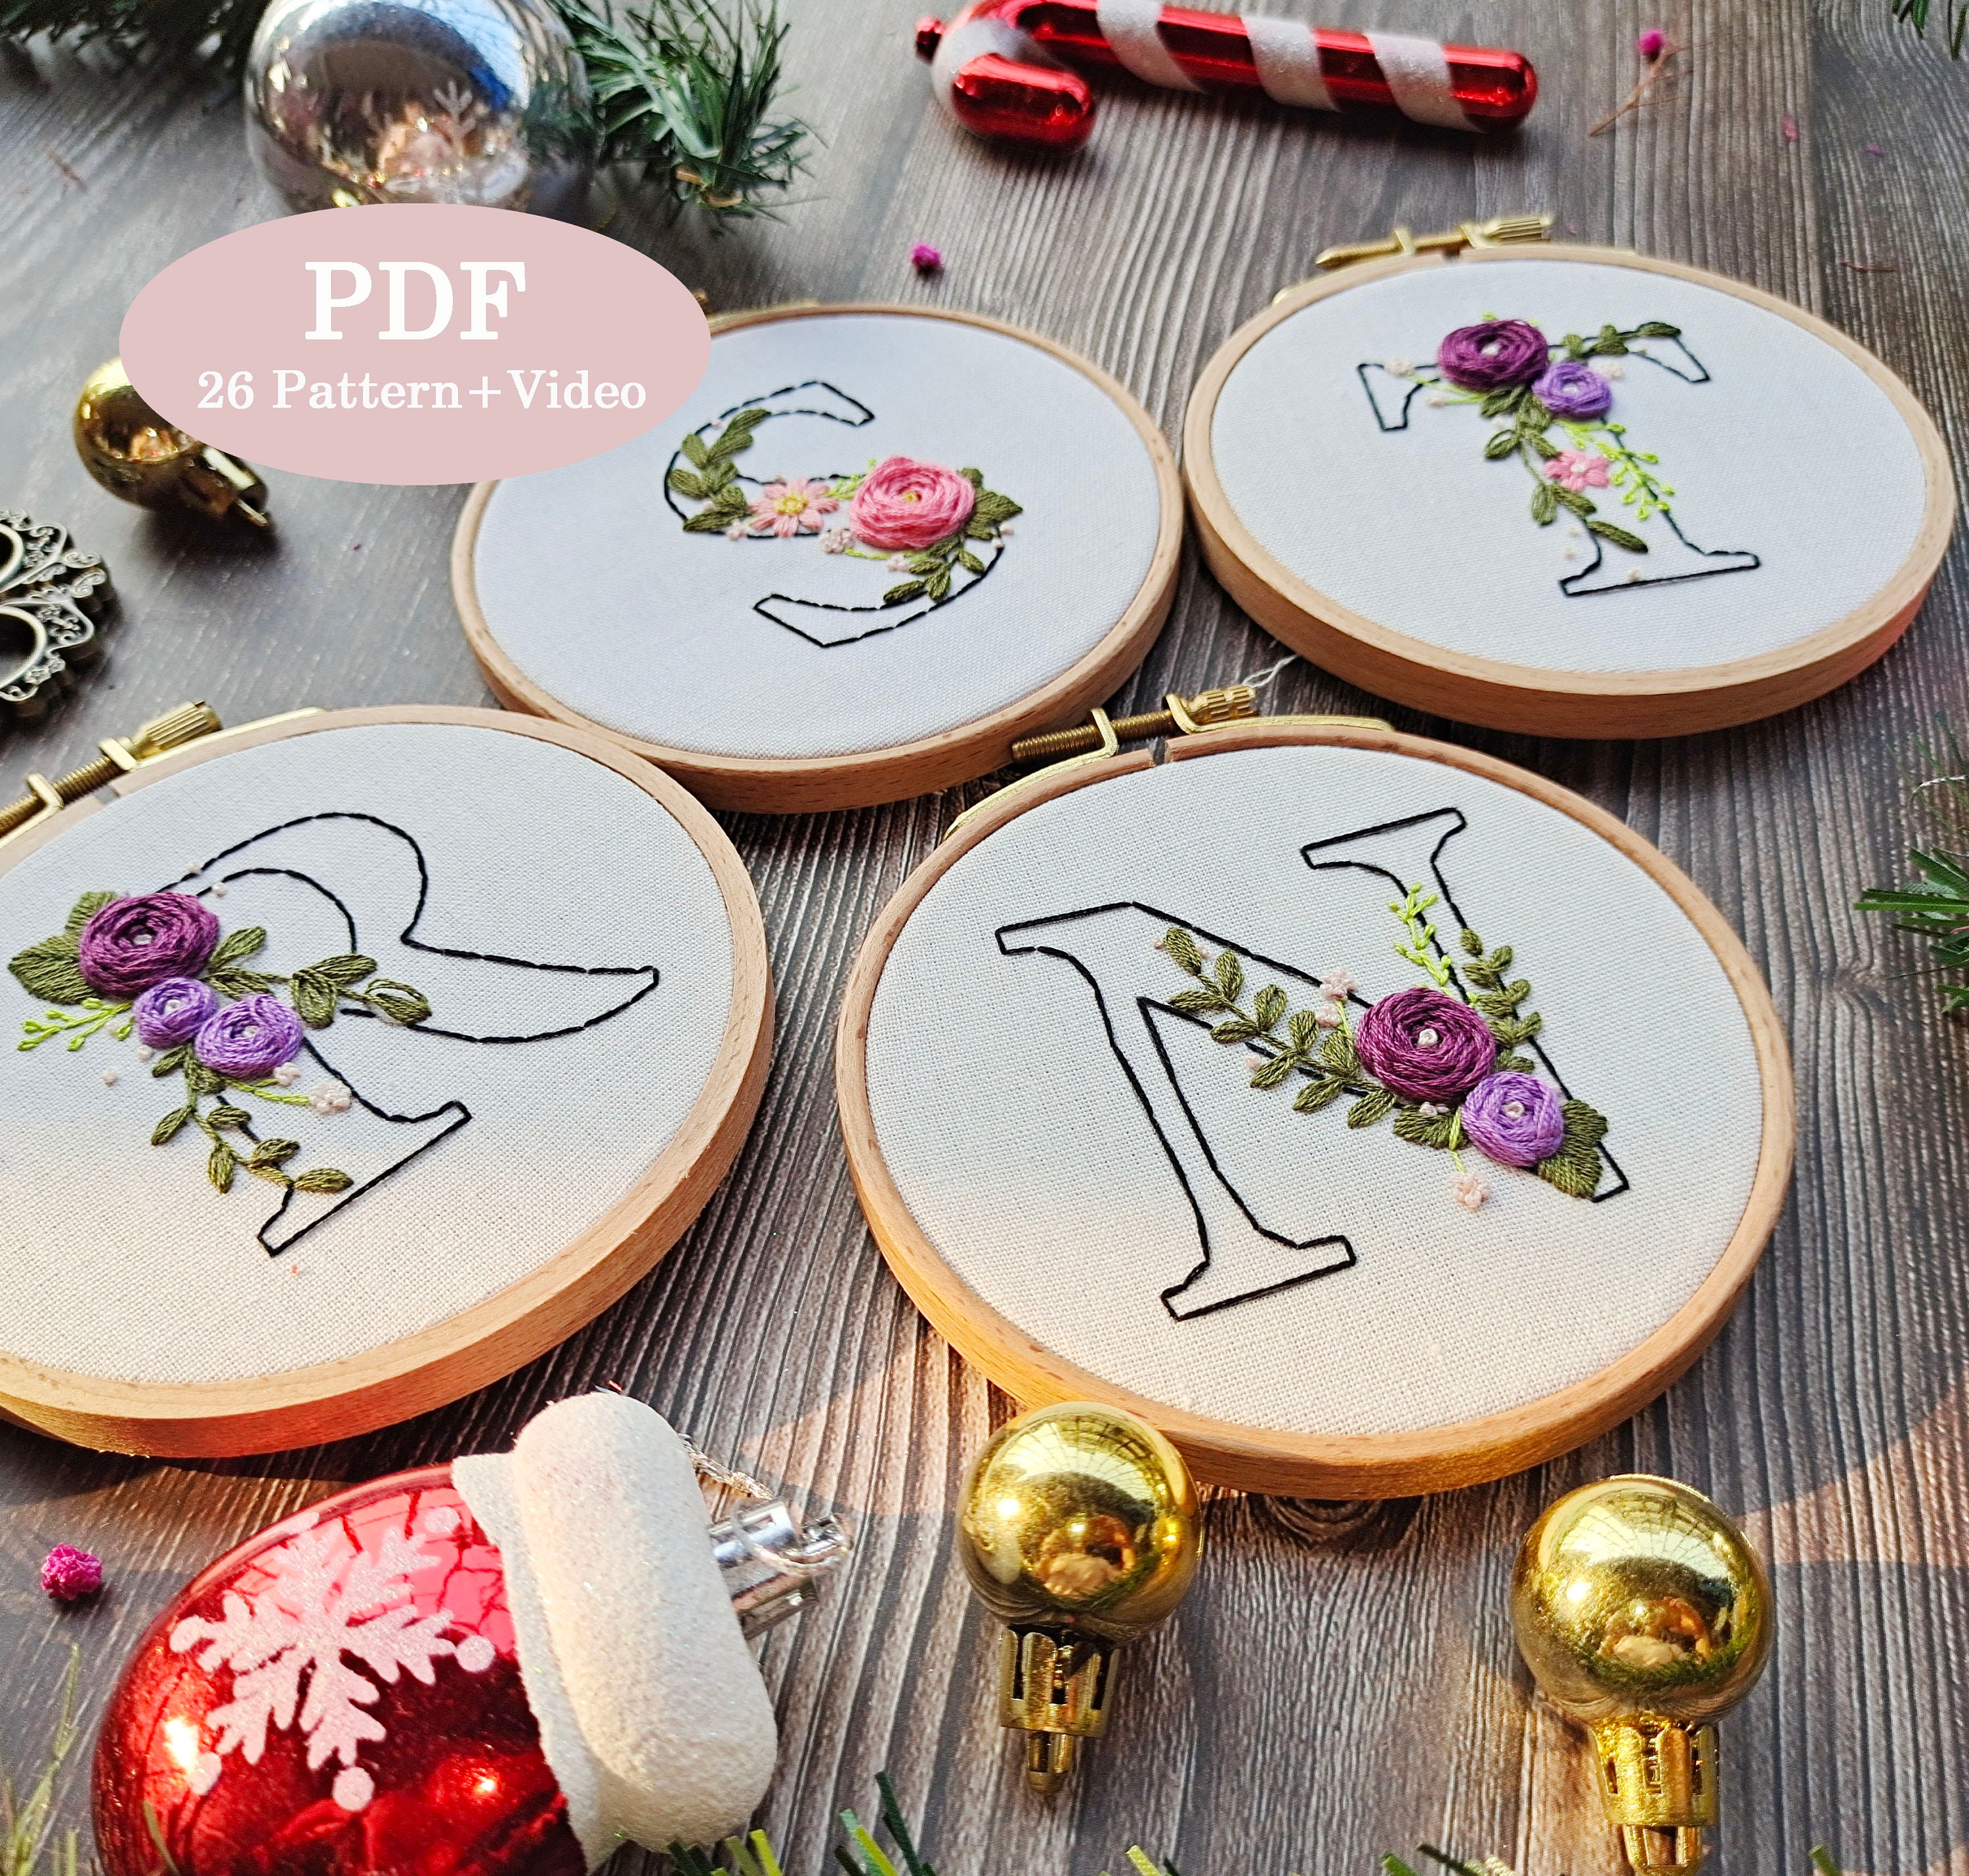 DIY Craft-Mushroom Birthday gift -Handmade Embroidery - Embroidery Kit -  Flower Embroidery-Embroidery- Party gift- Kids Craft-Needlework Kit